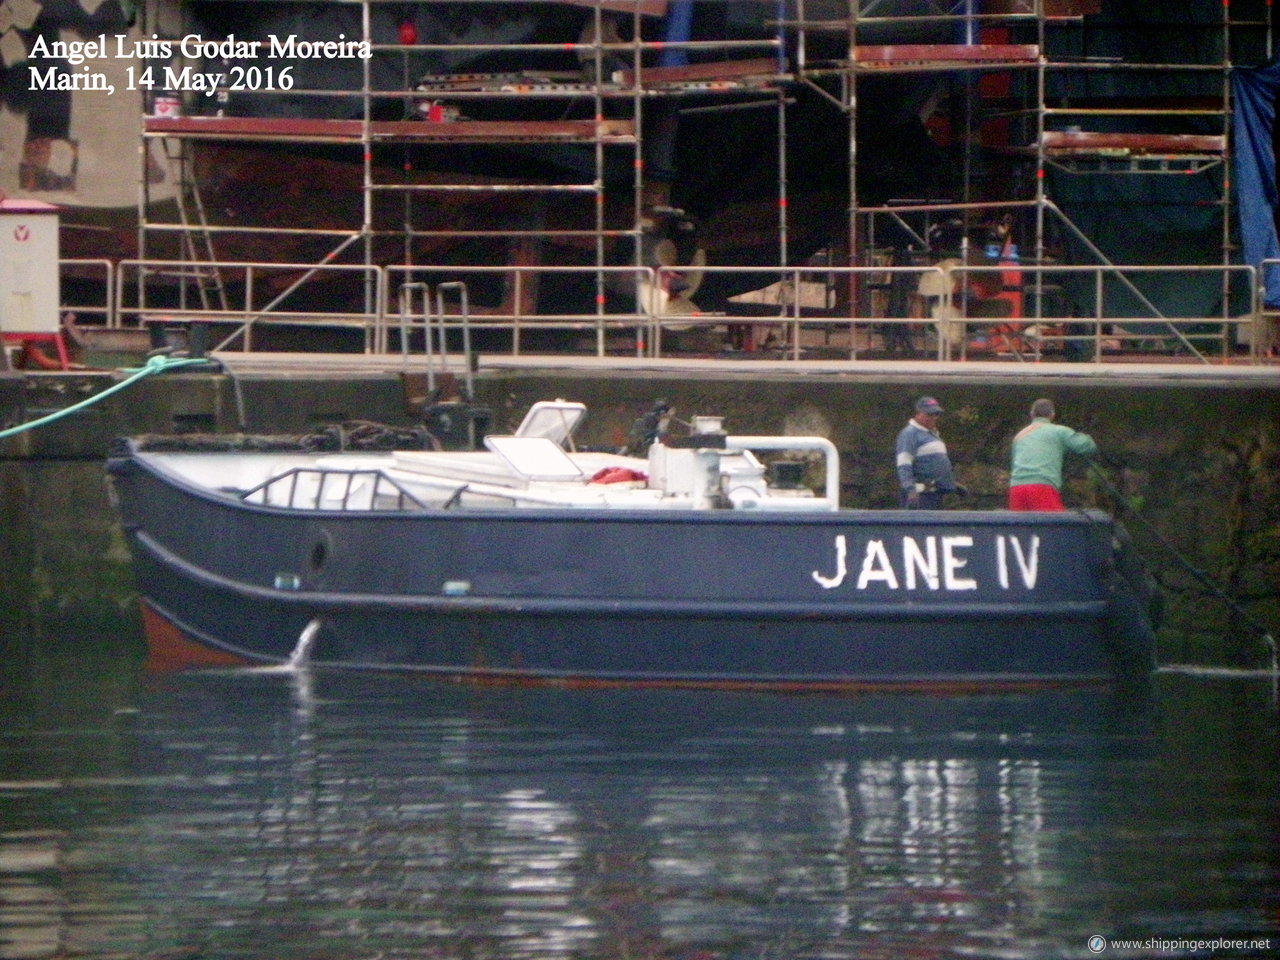 Jane IV